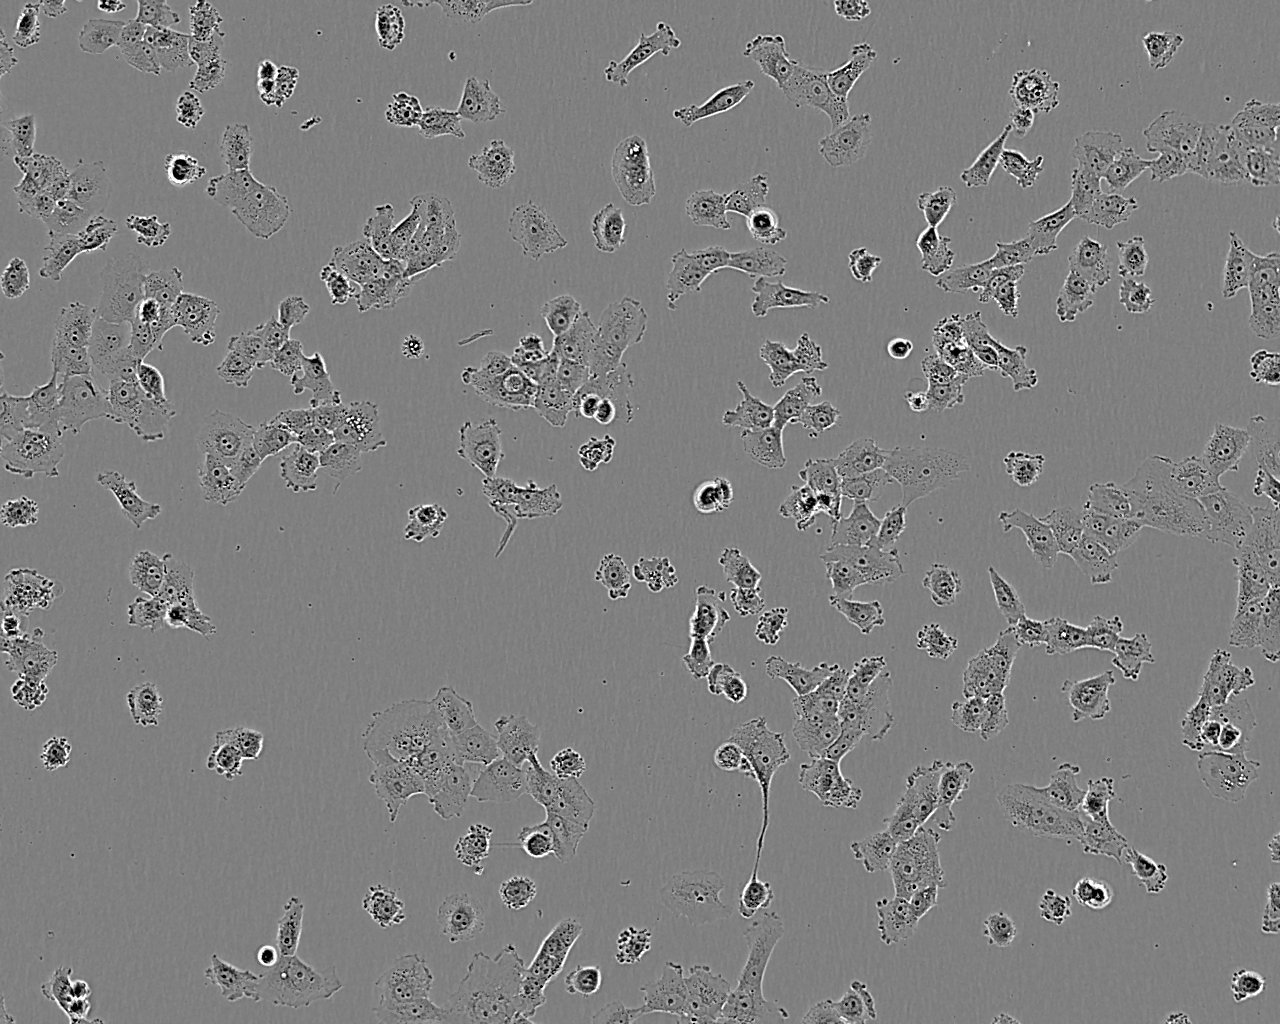 SW1990 epithelioid cells人胰腺癌细胞系